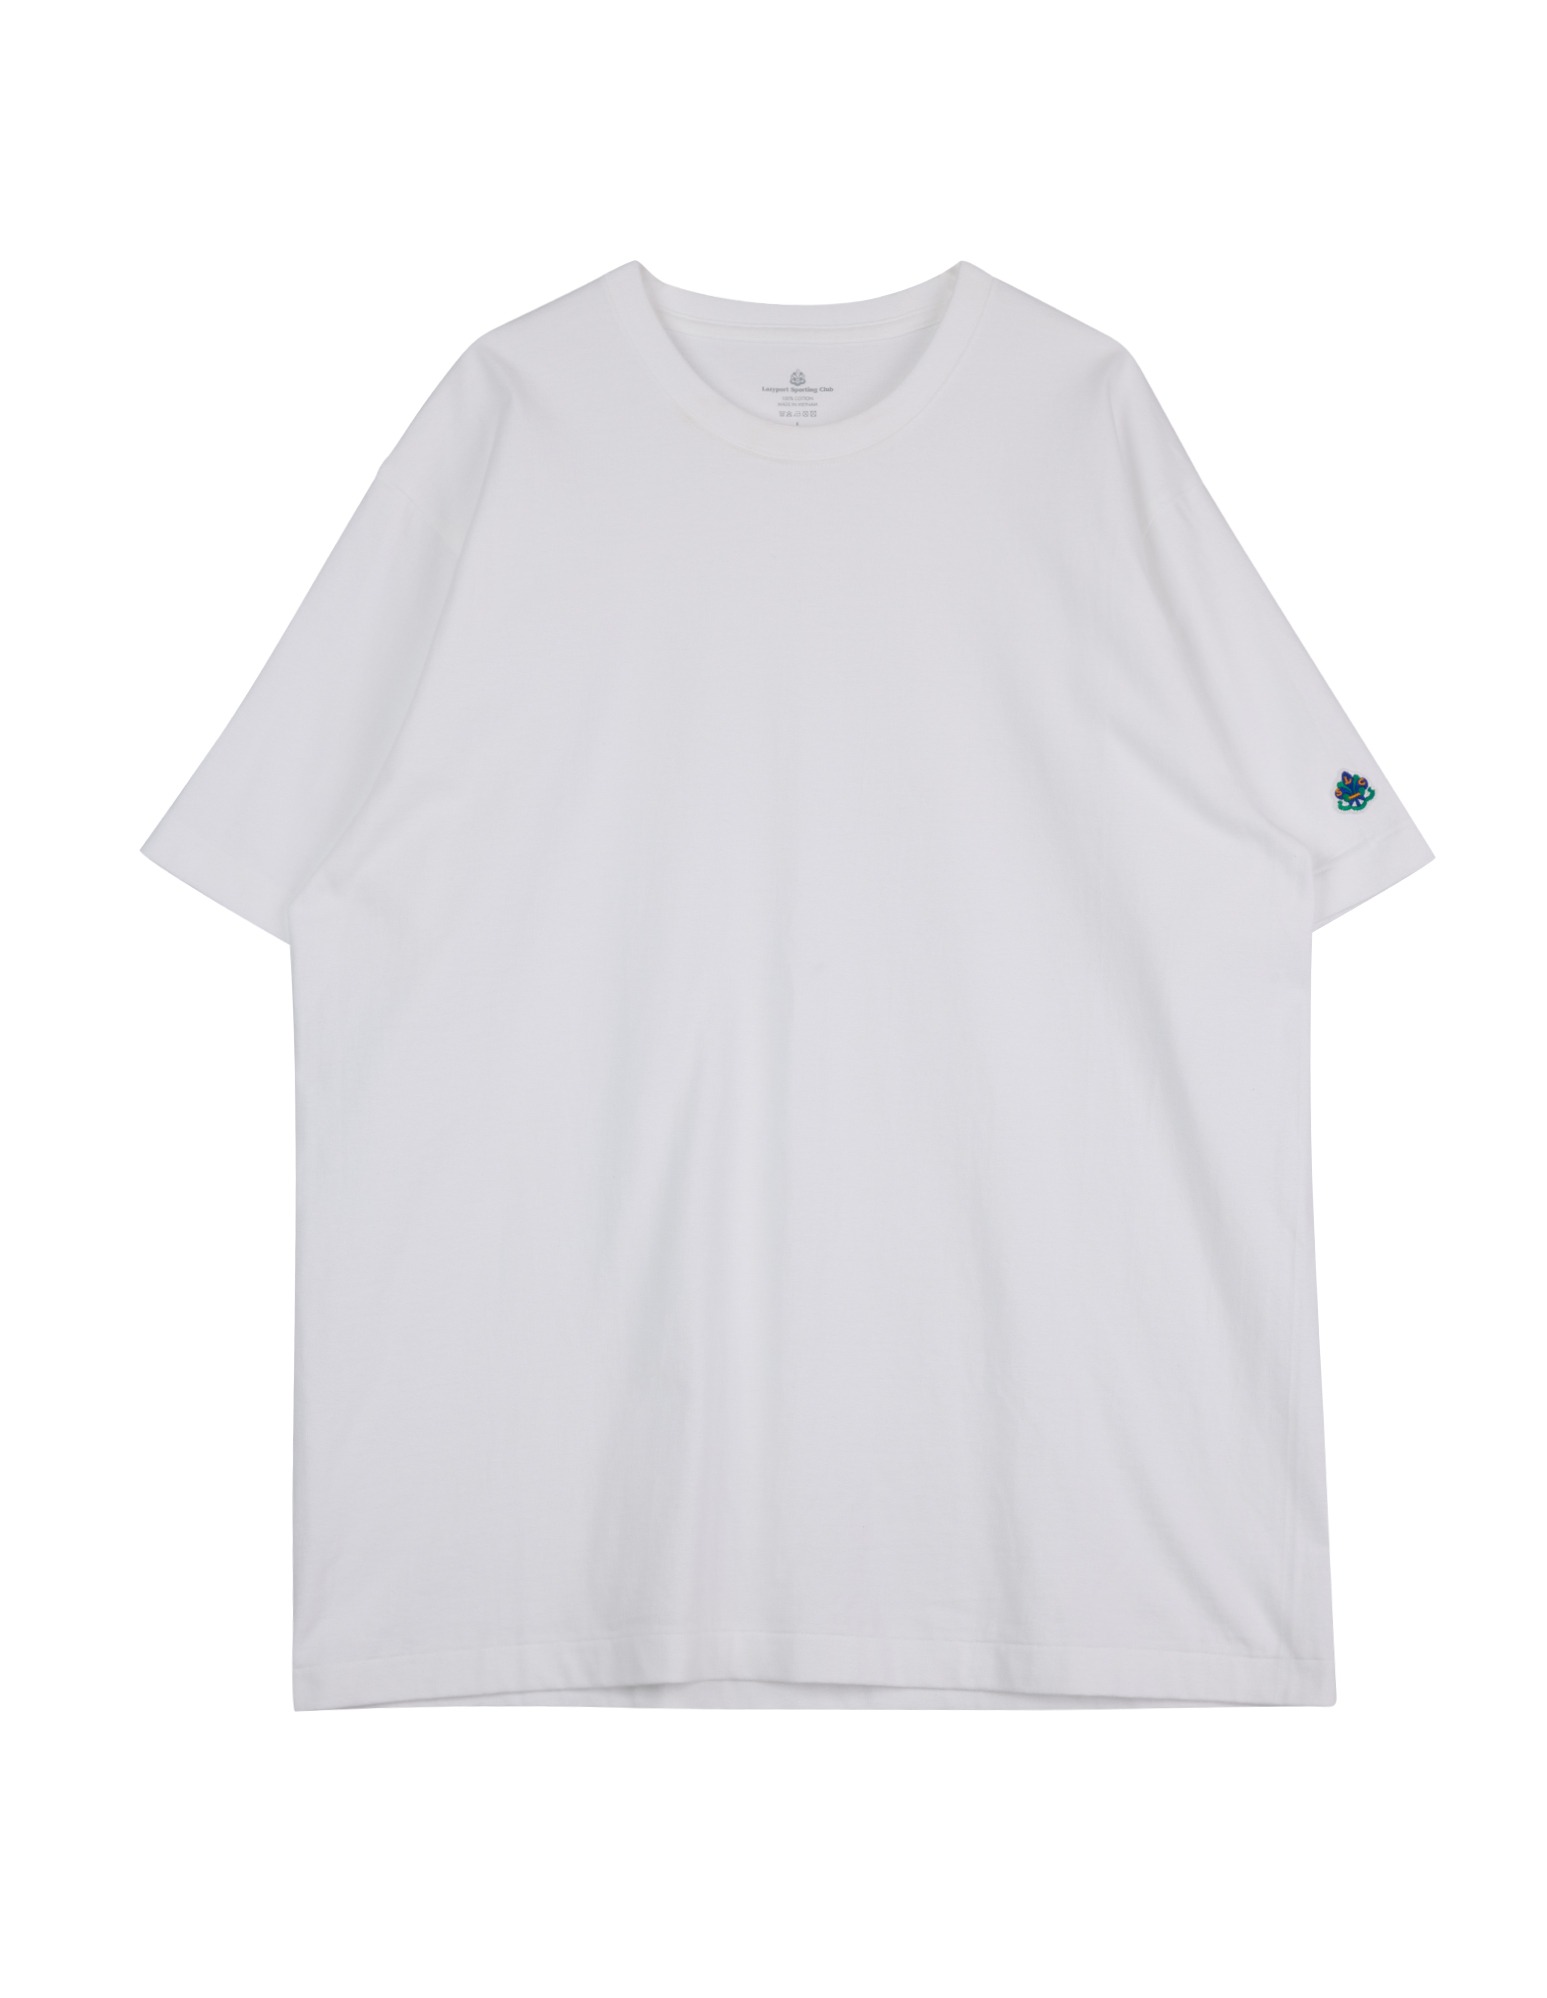 LSC Tubular T Shirt (White)